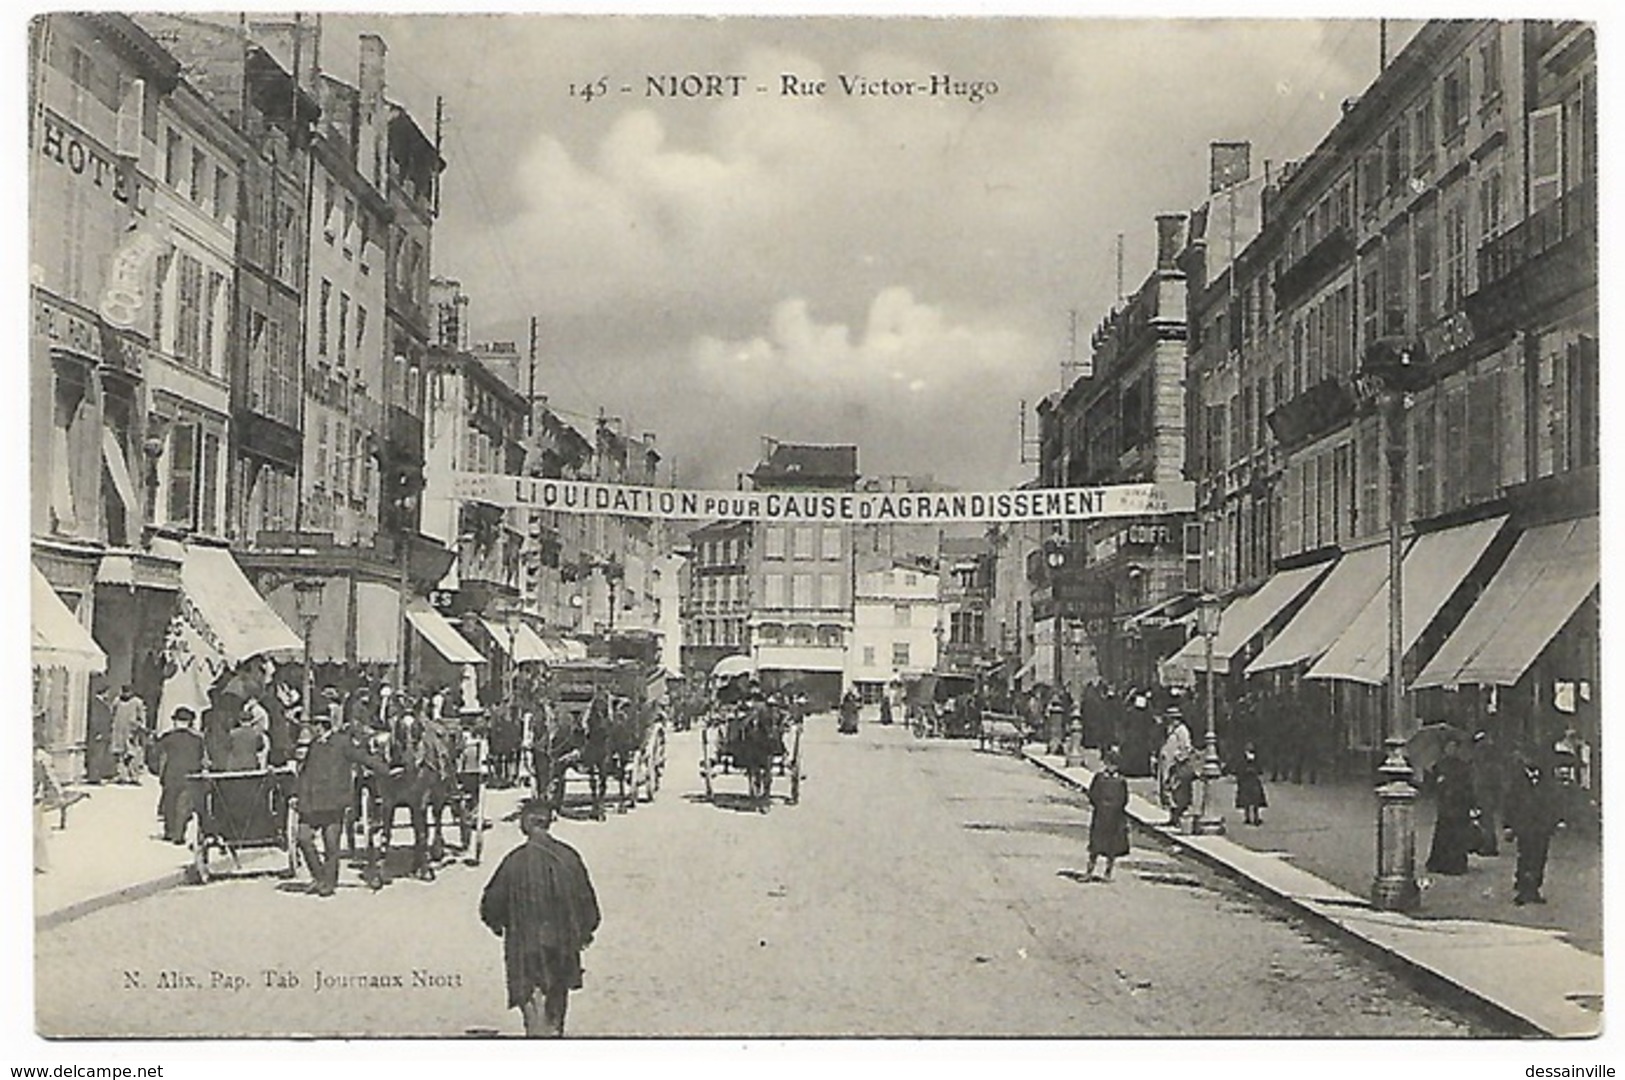 NIORT - Rue Victor Hugo - Banderole LIQUIDATION POUR CAUSE D'AGRANDISSEMENT - Niort